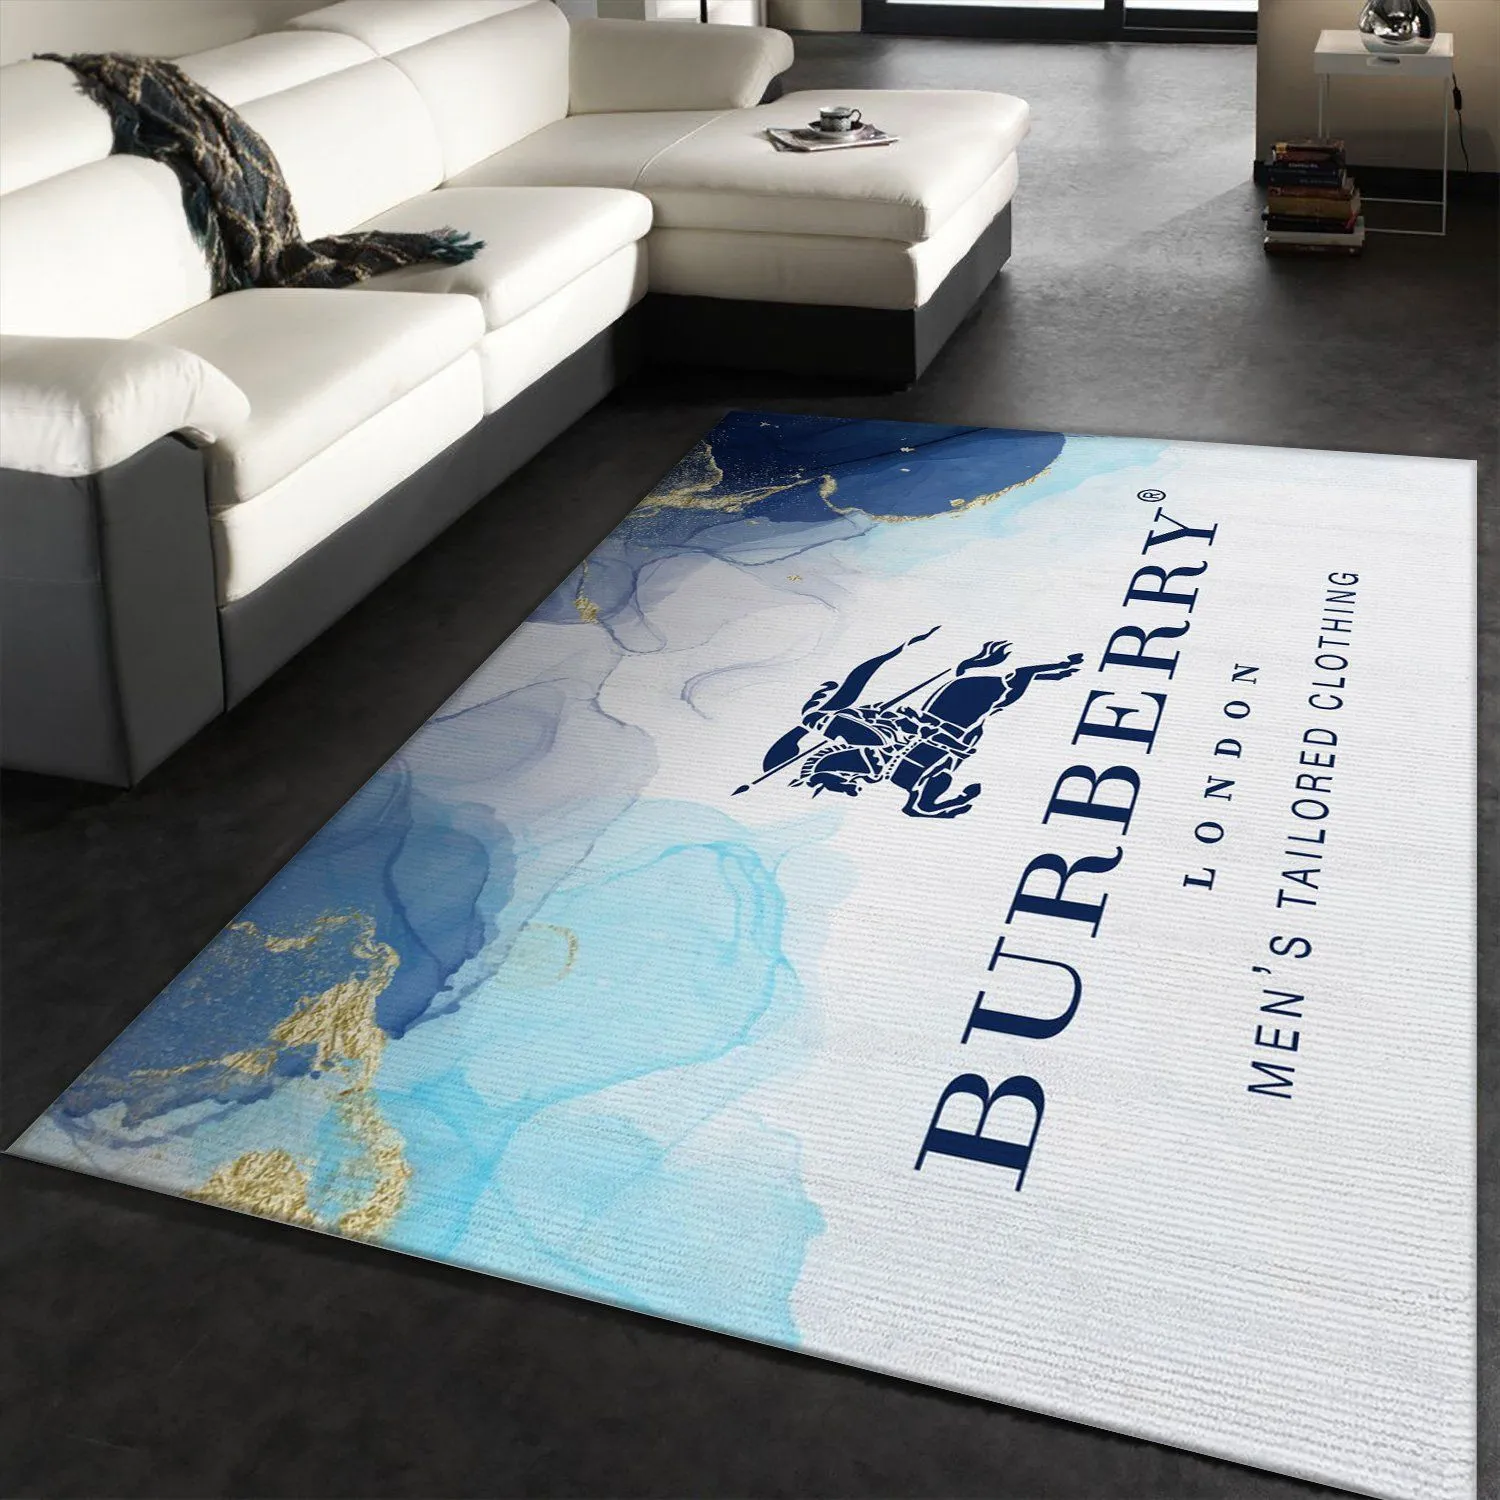 Burberry Rectangle Rug Luxury Home Decor Door Mat Area Carpet Fashion Brand